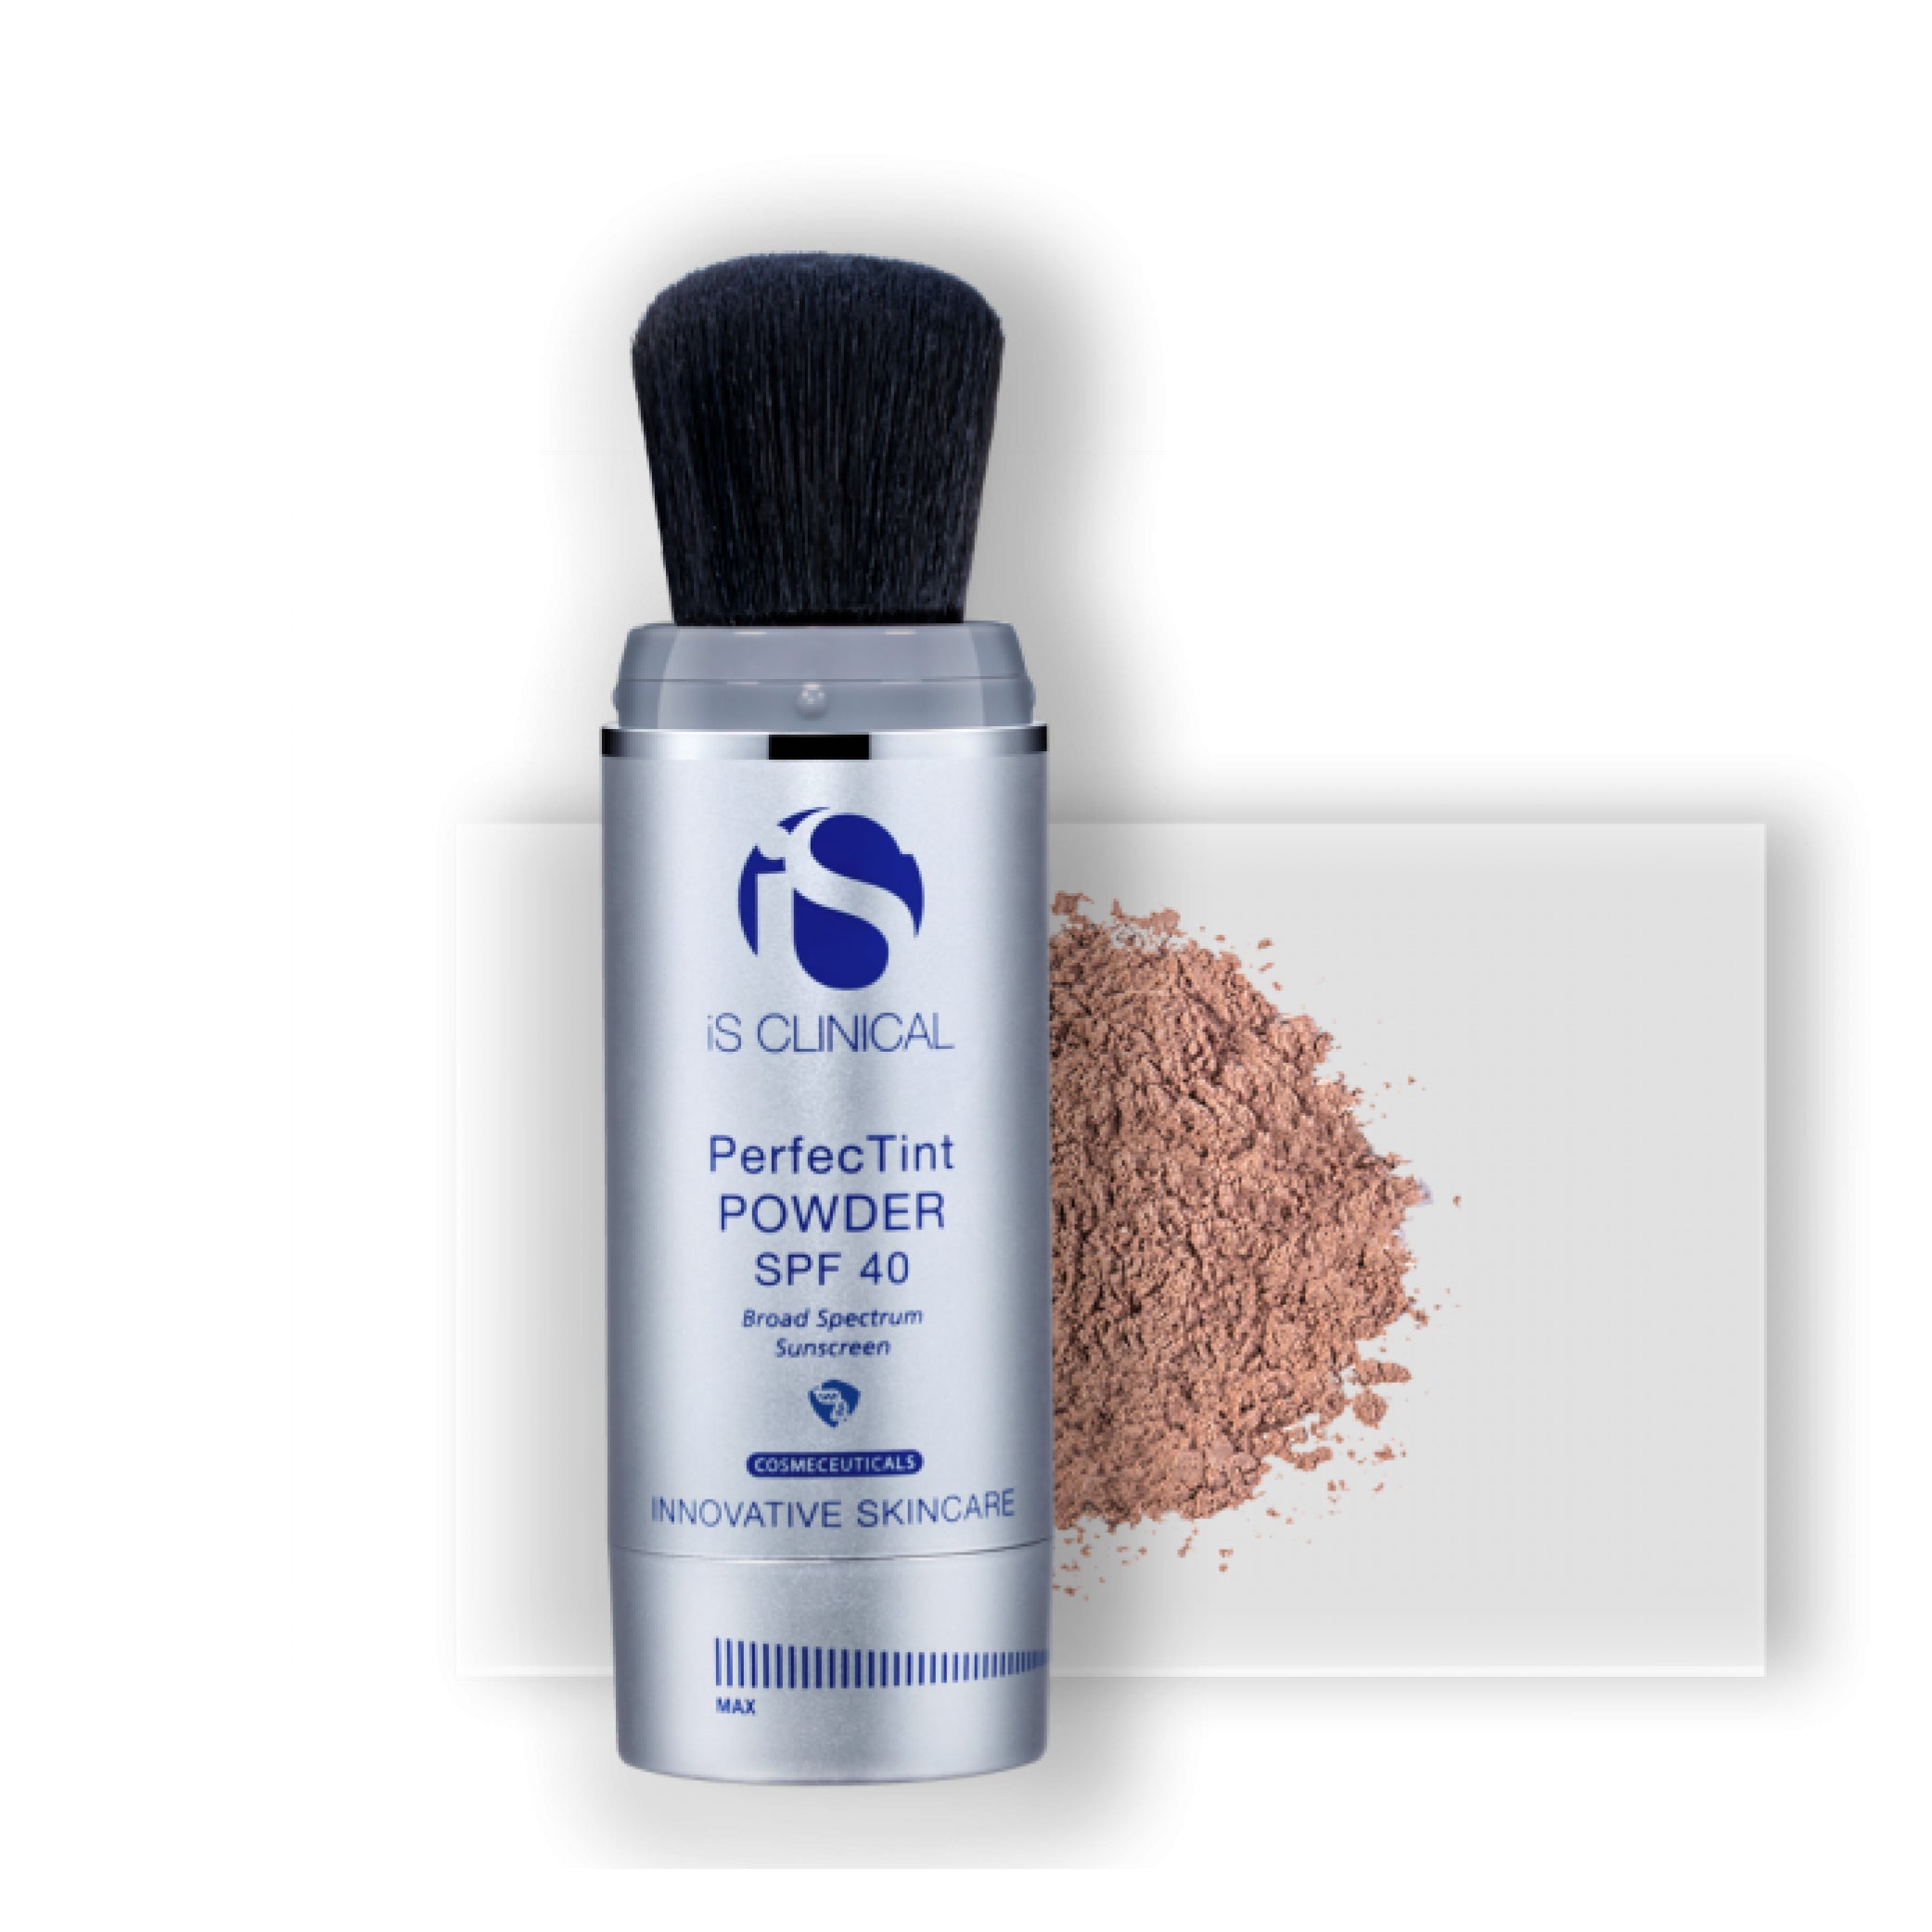 PerfecTint Powder SPF 40